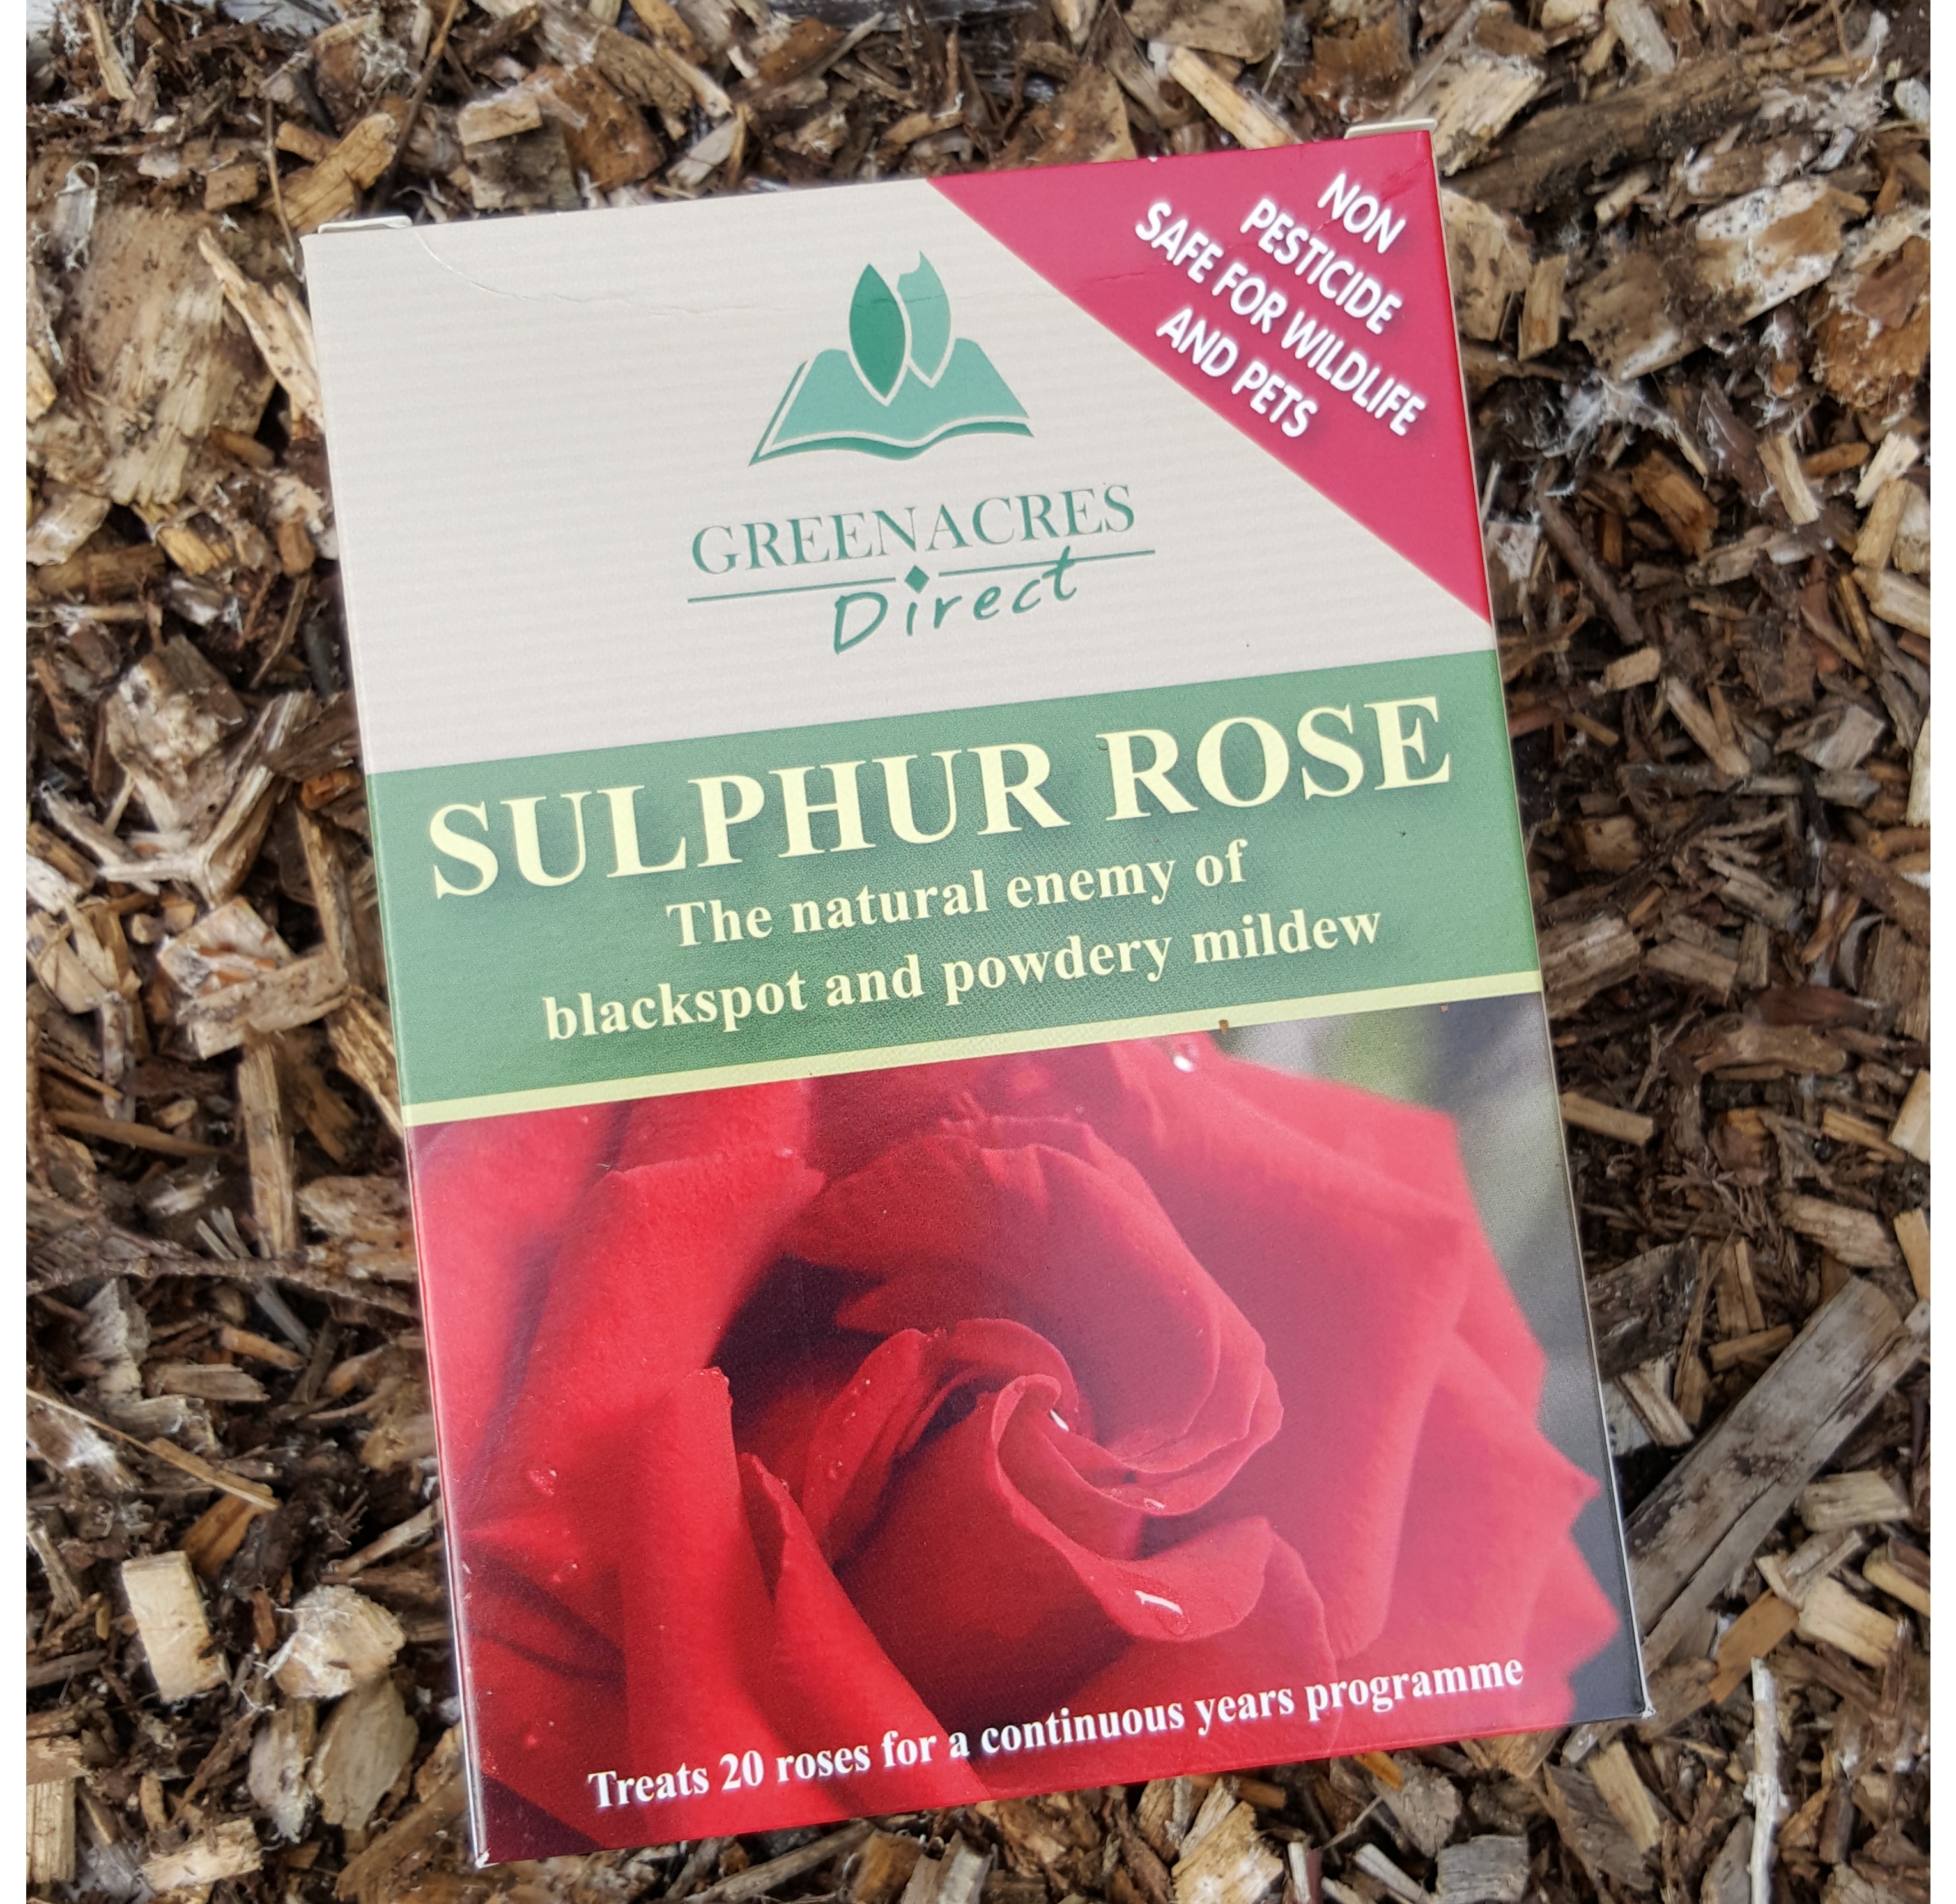 Greenacres Direct Sulphur Rose treatment